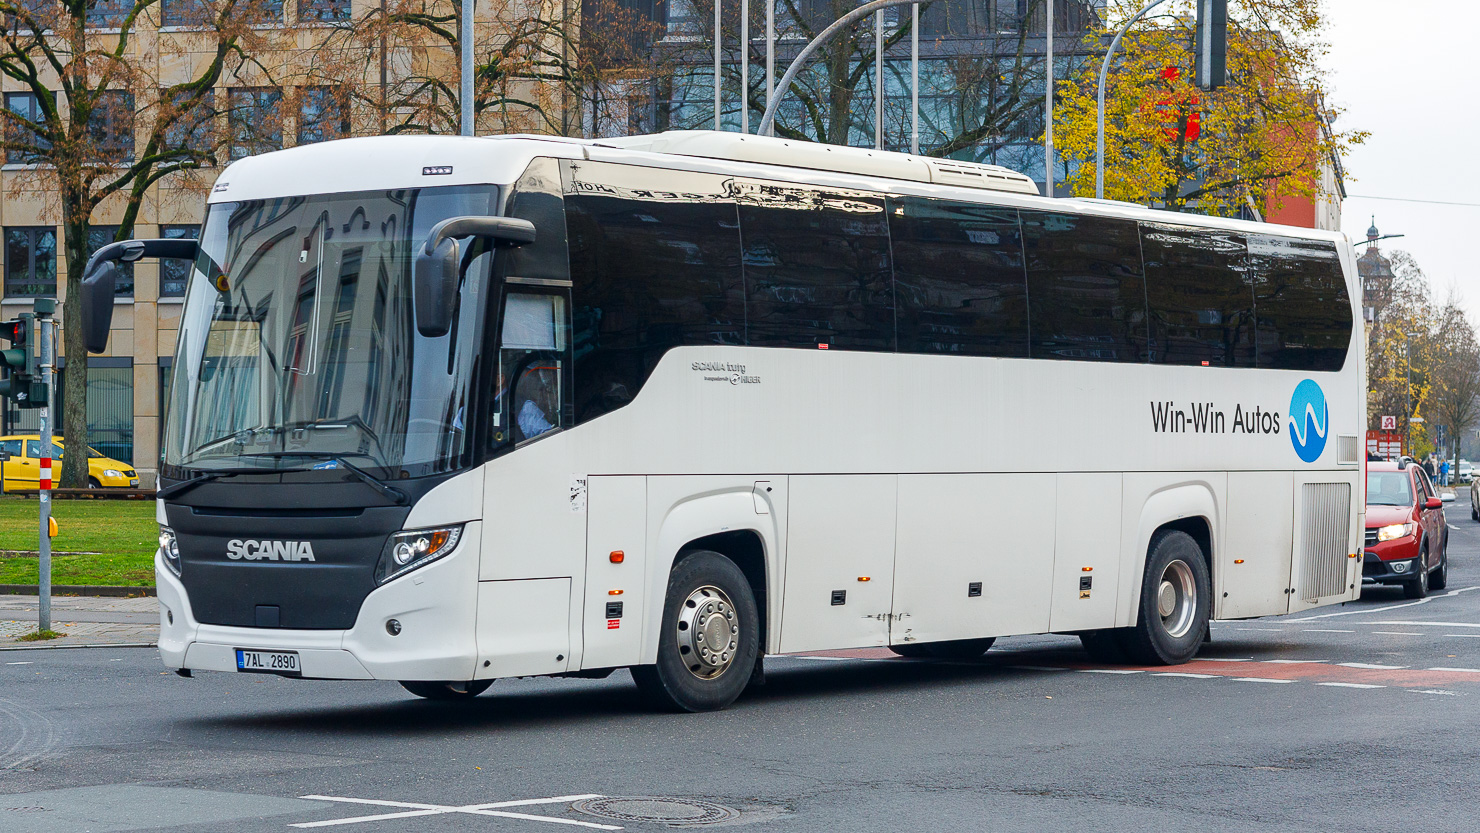 Prague, Scania Touring HD (Higer A80T) №: 7AL 2890